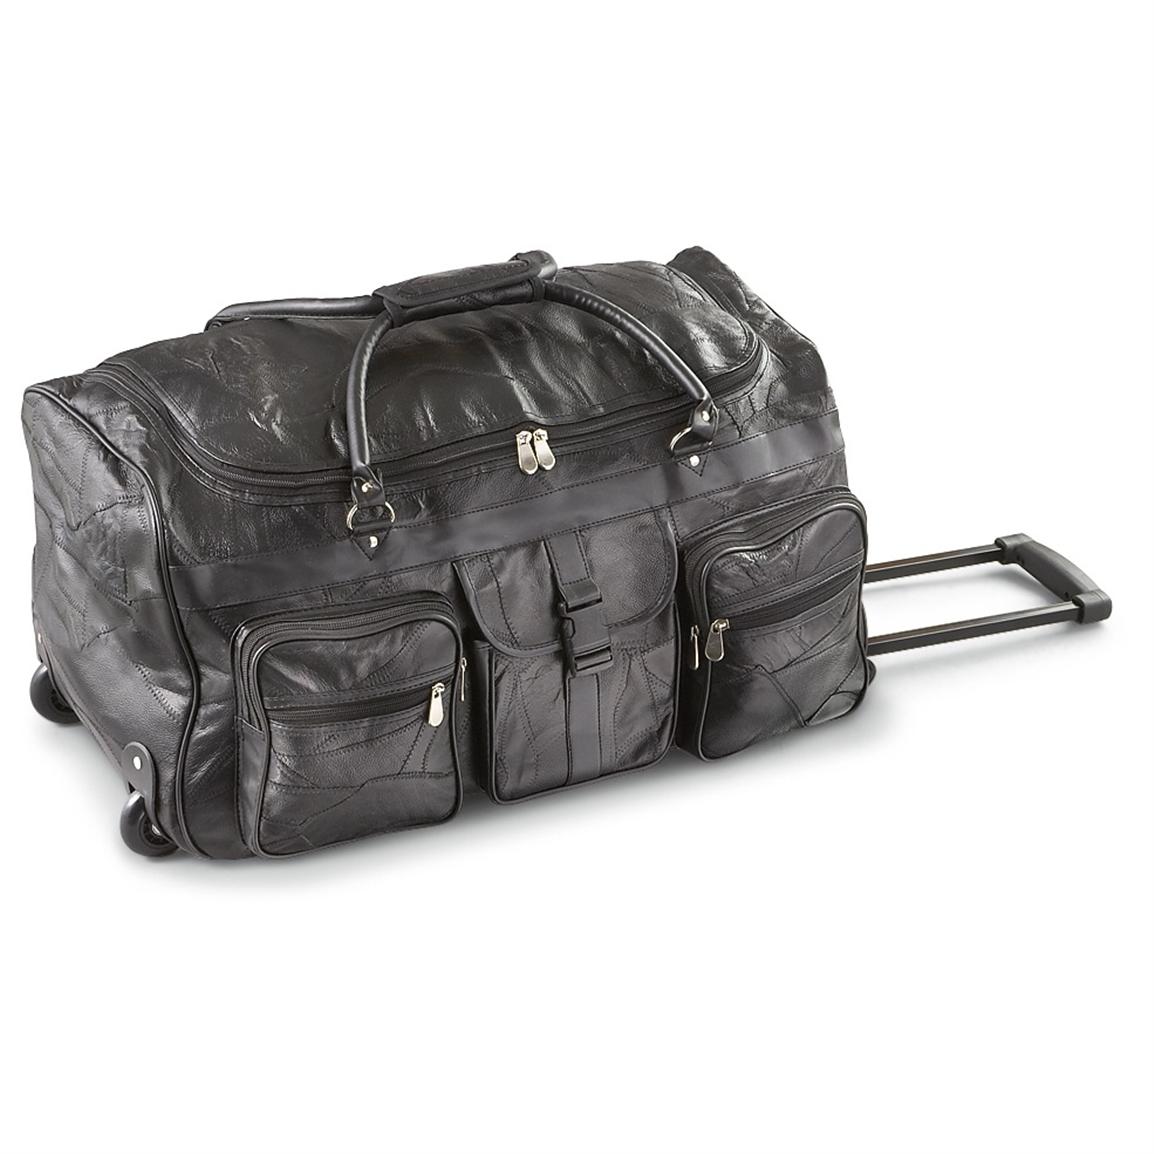 Duffle Bag Luggage With Wheels Best | semashow.com